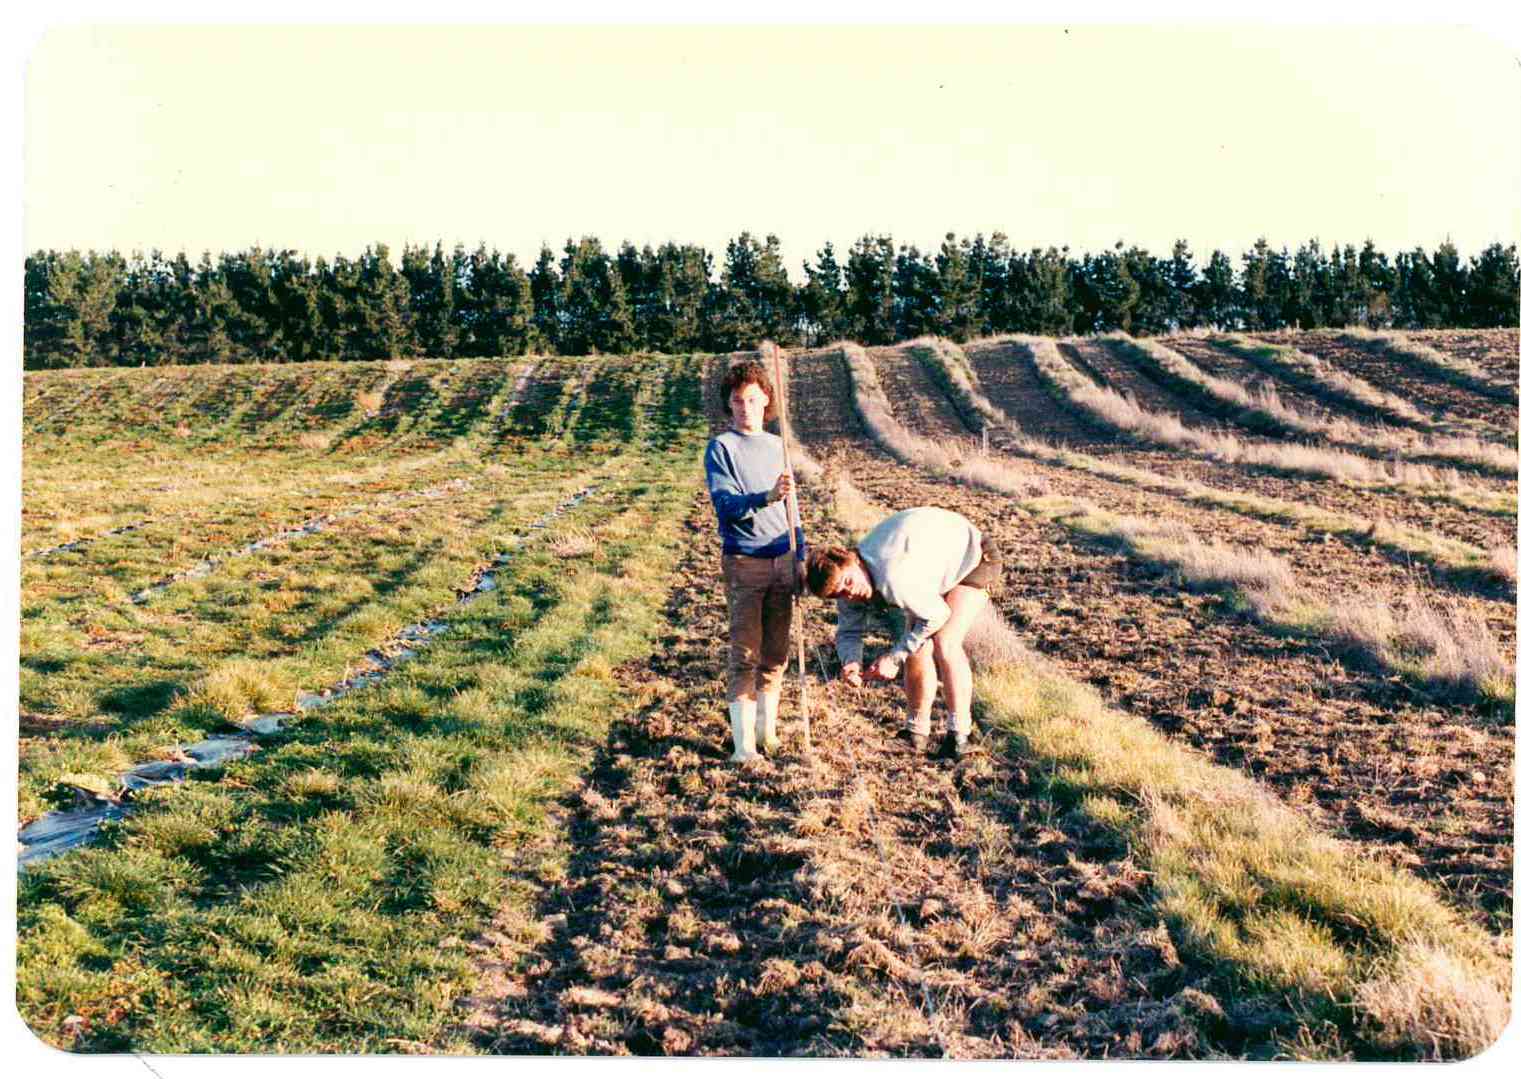 Planting the vineyard